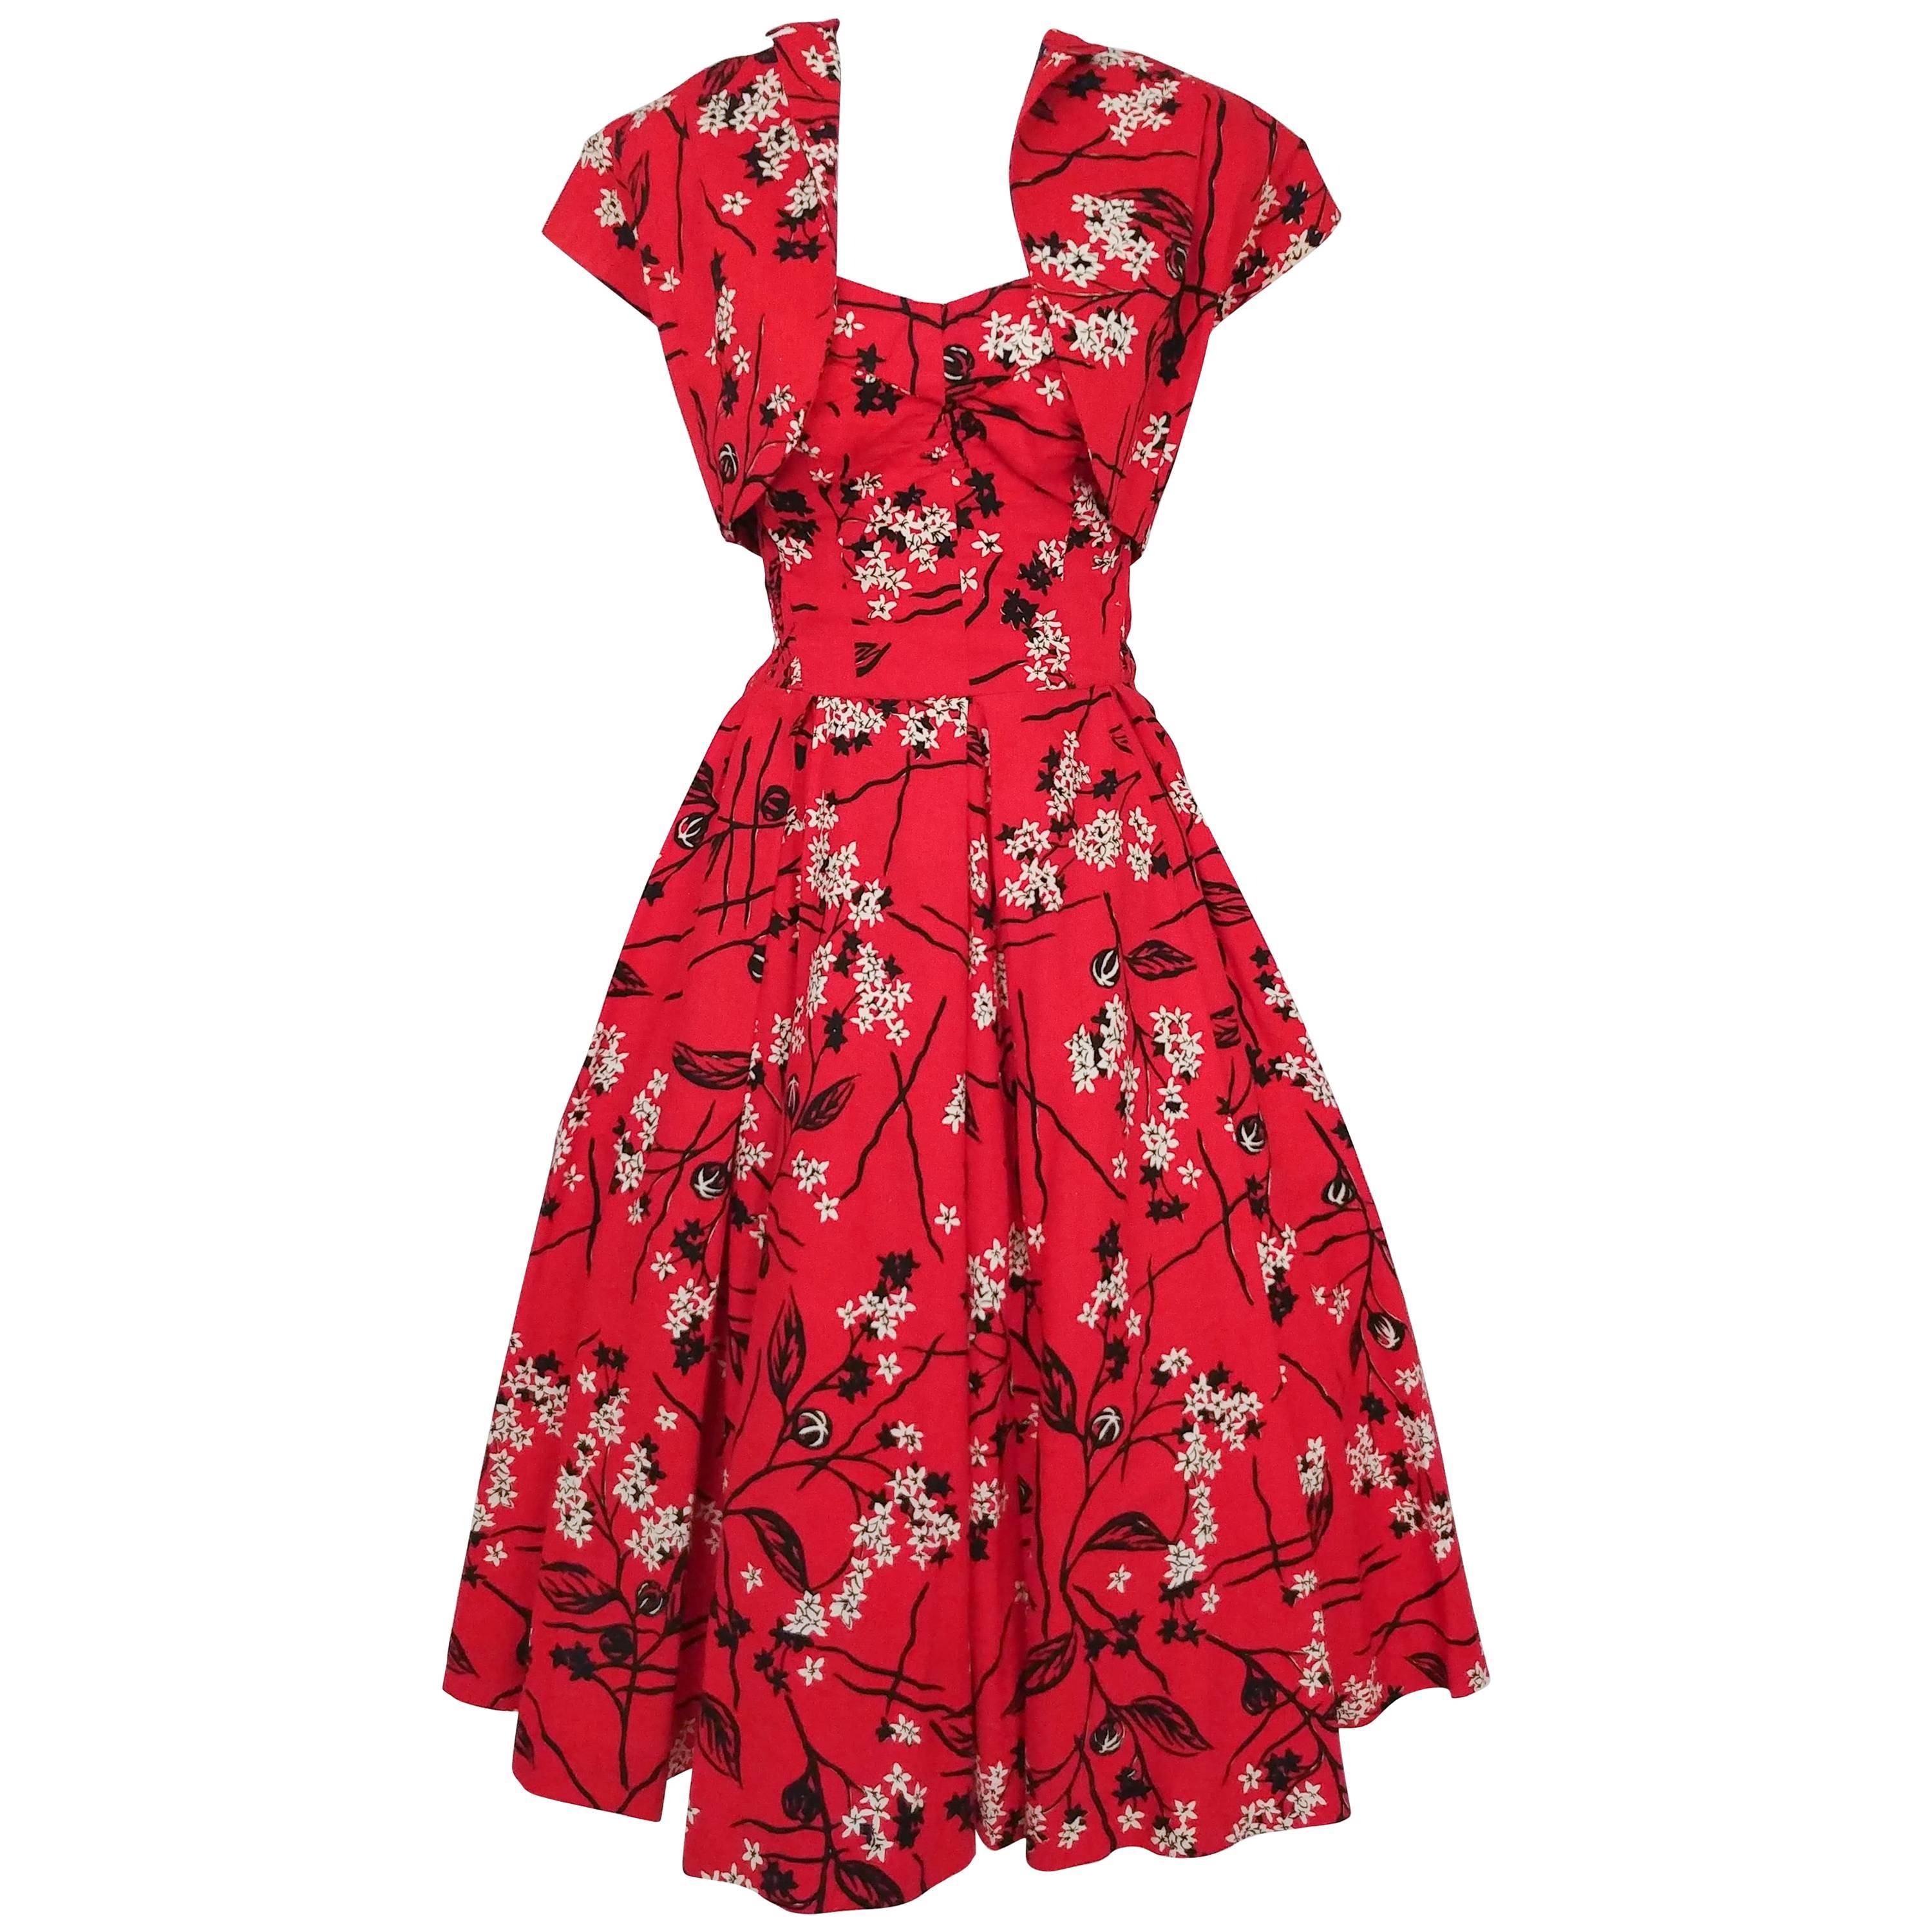 Shaheen Tiki Print Red Dress and Bolero Set, 1950s